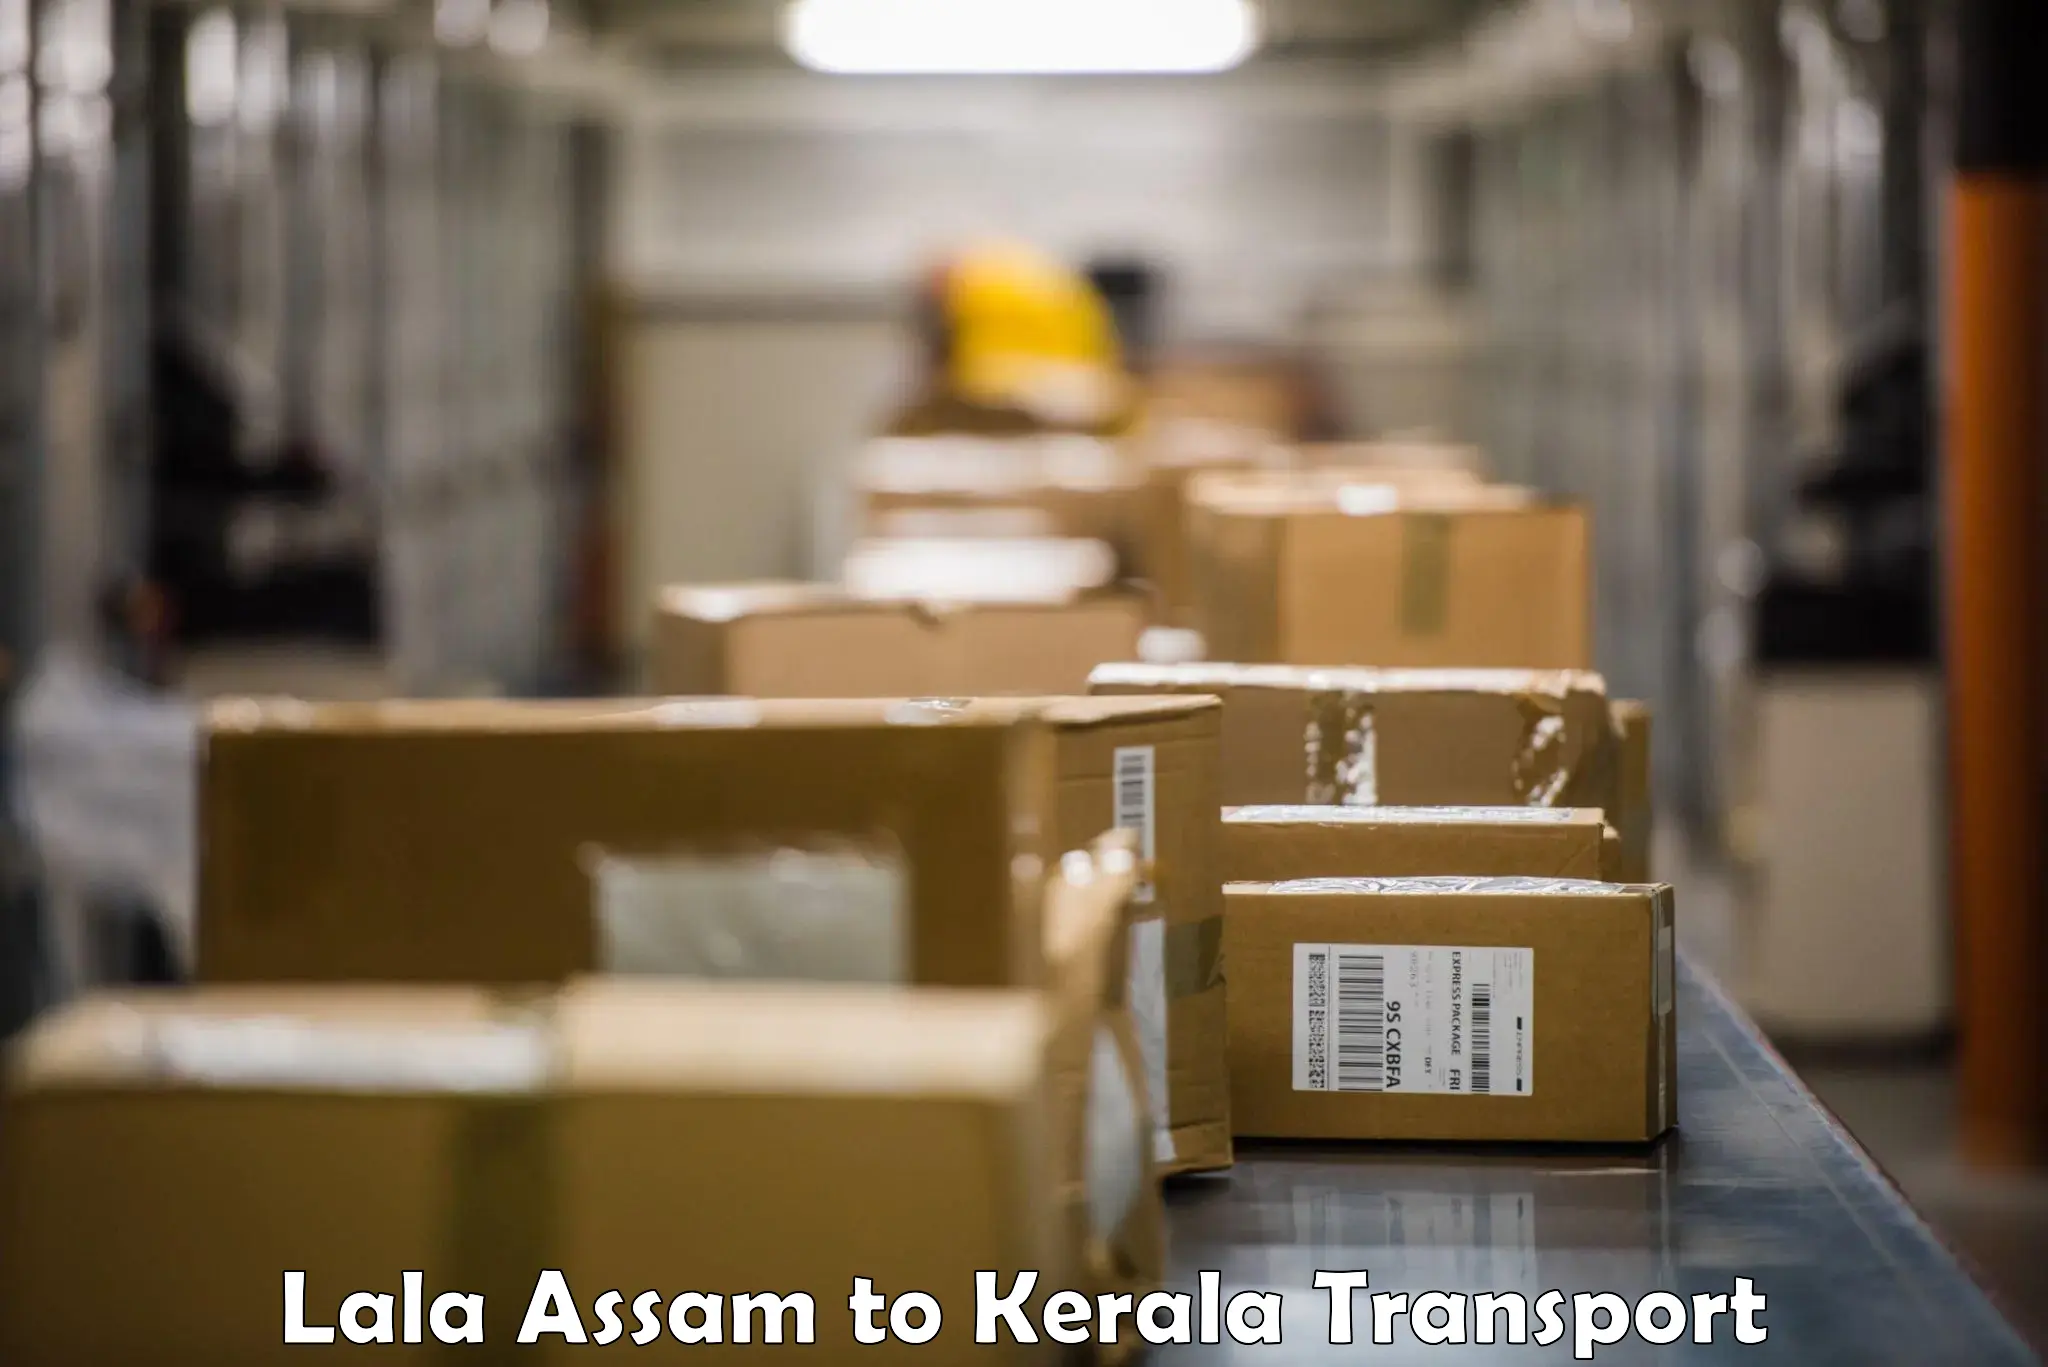 Nearest transport service in Lala Assam to Agali